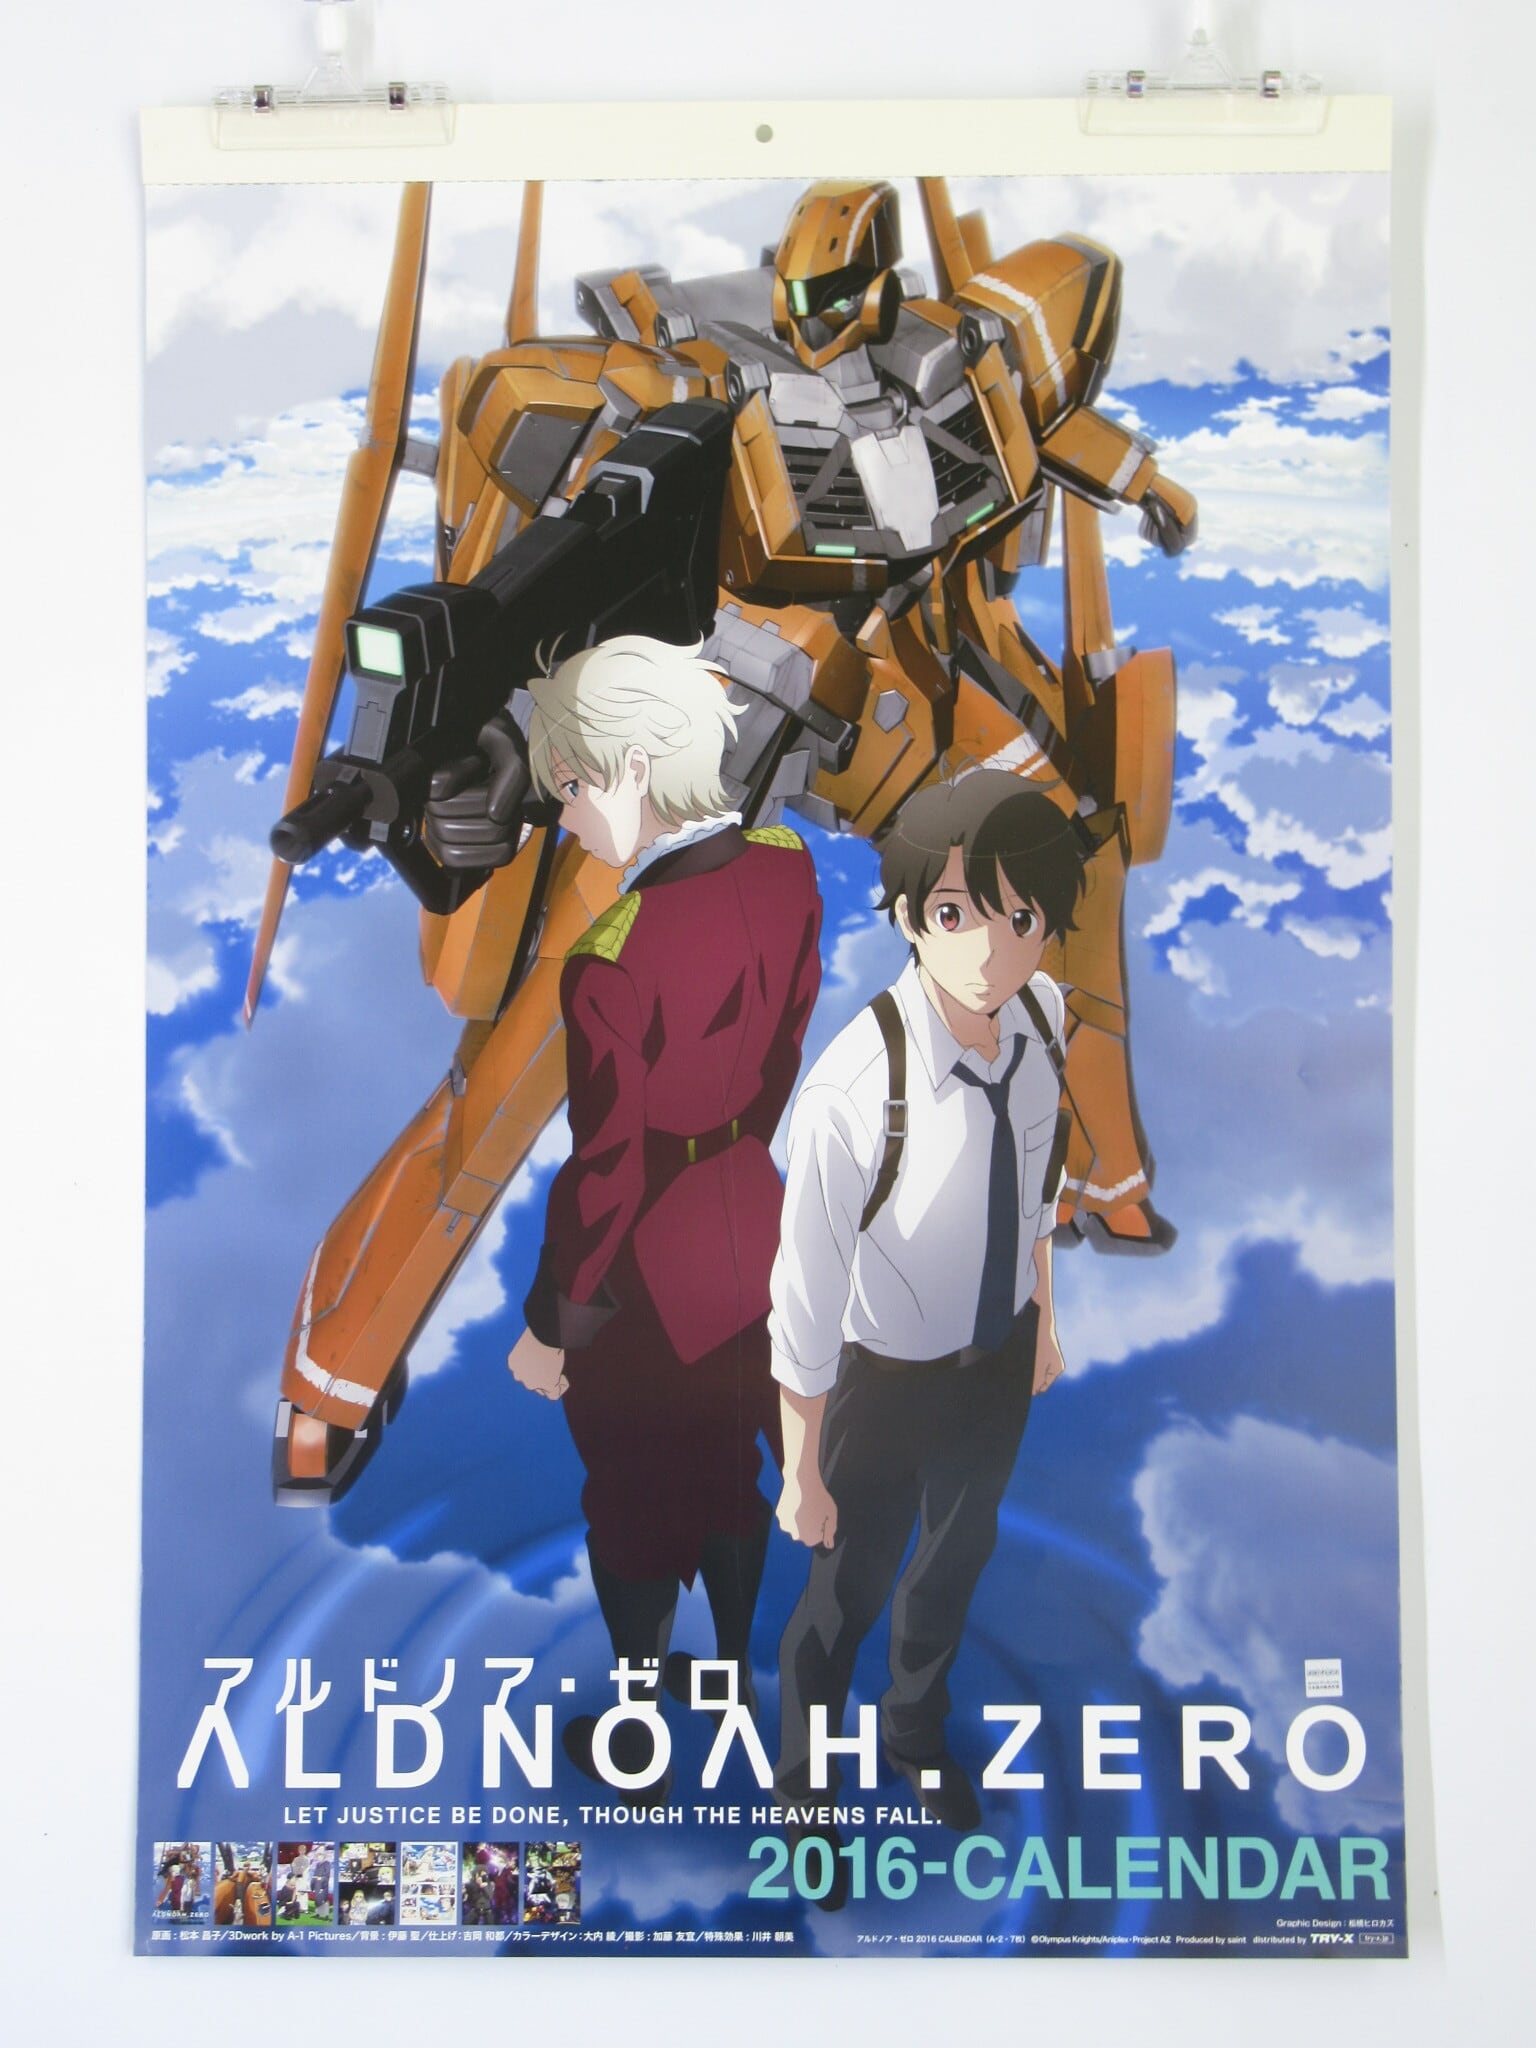 Ad, Wondje. on X: My take : In S01 of the anime Aldnoah Zero